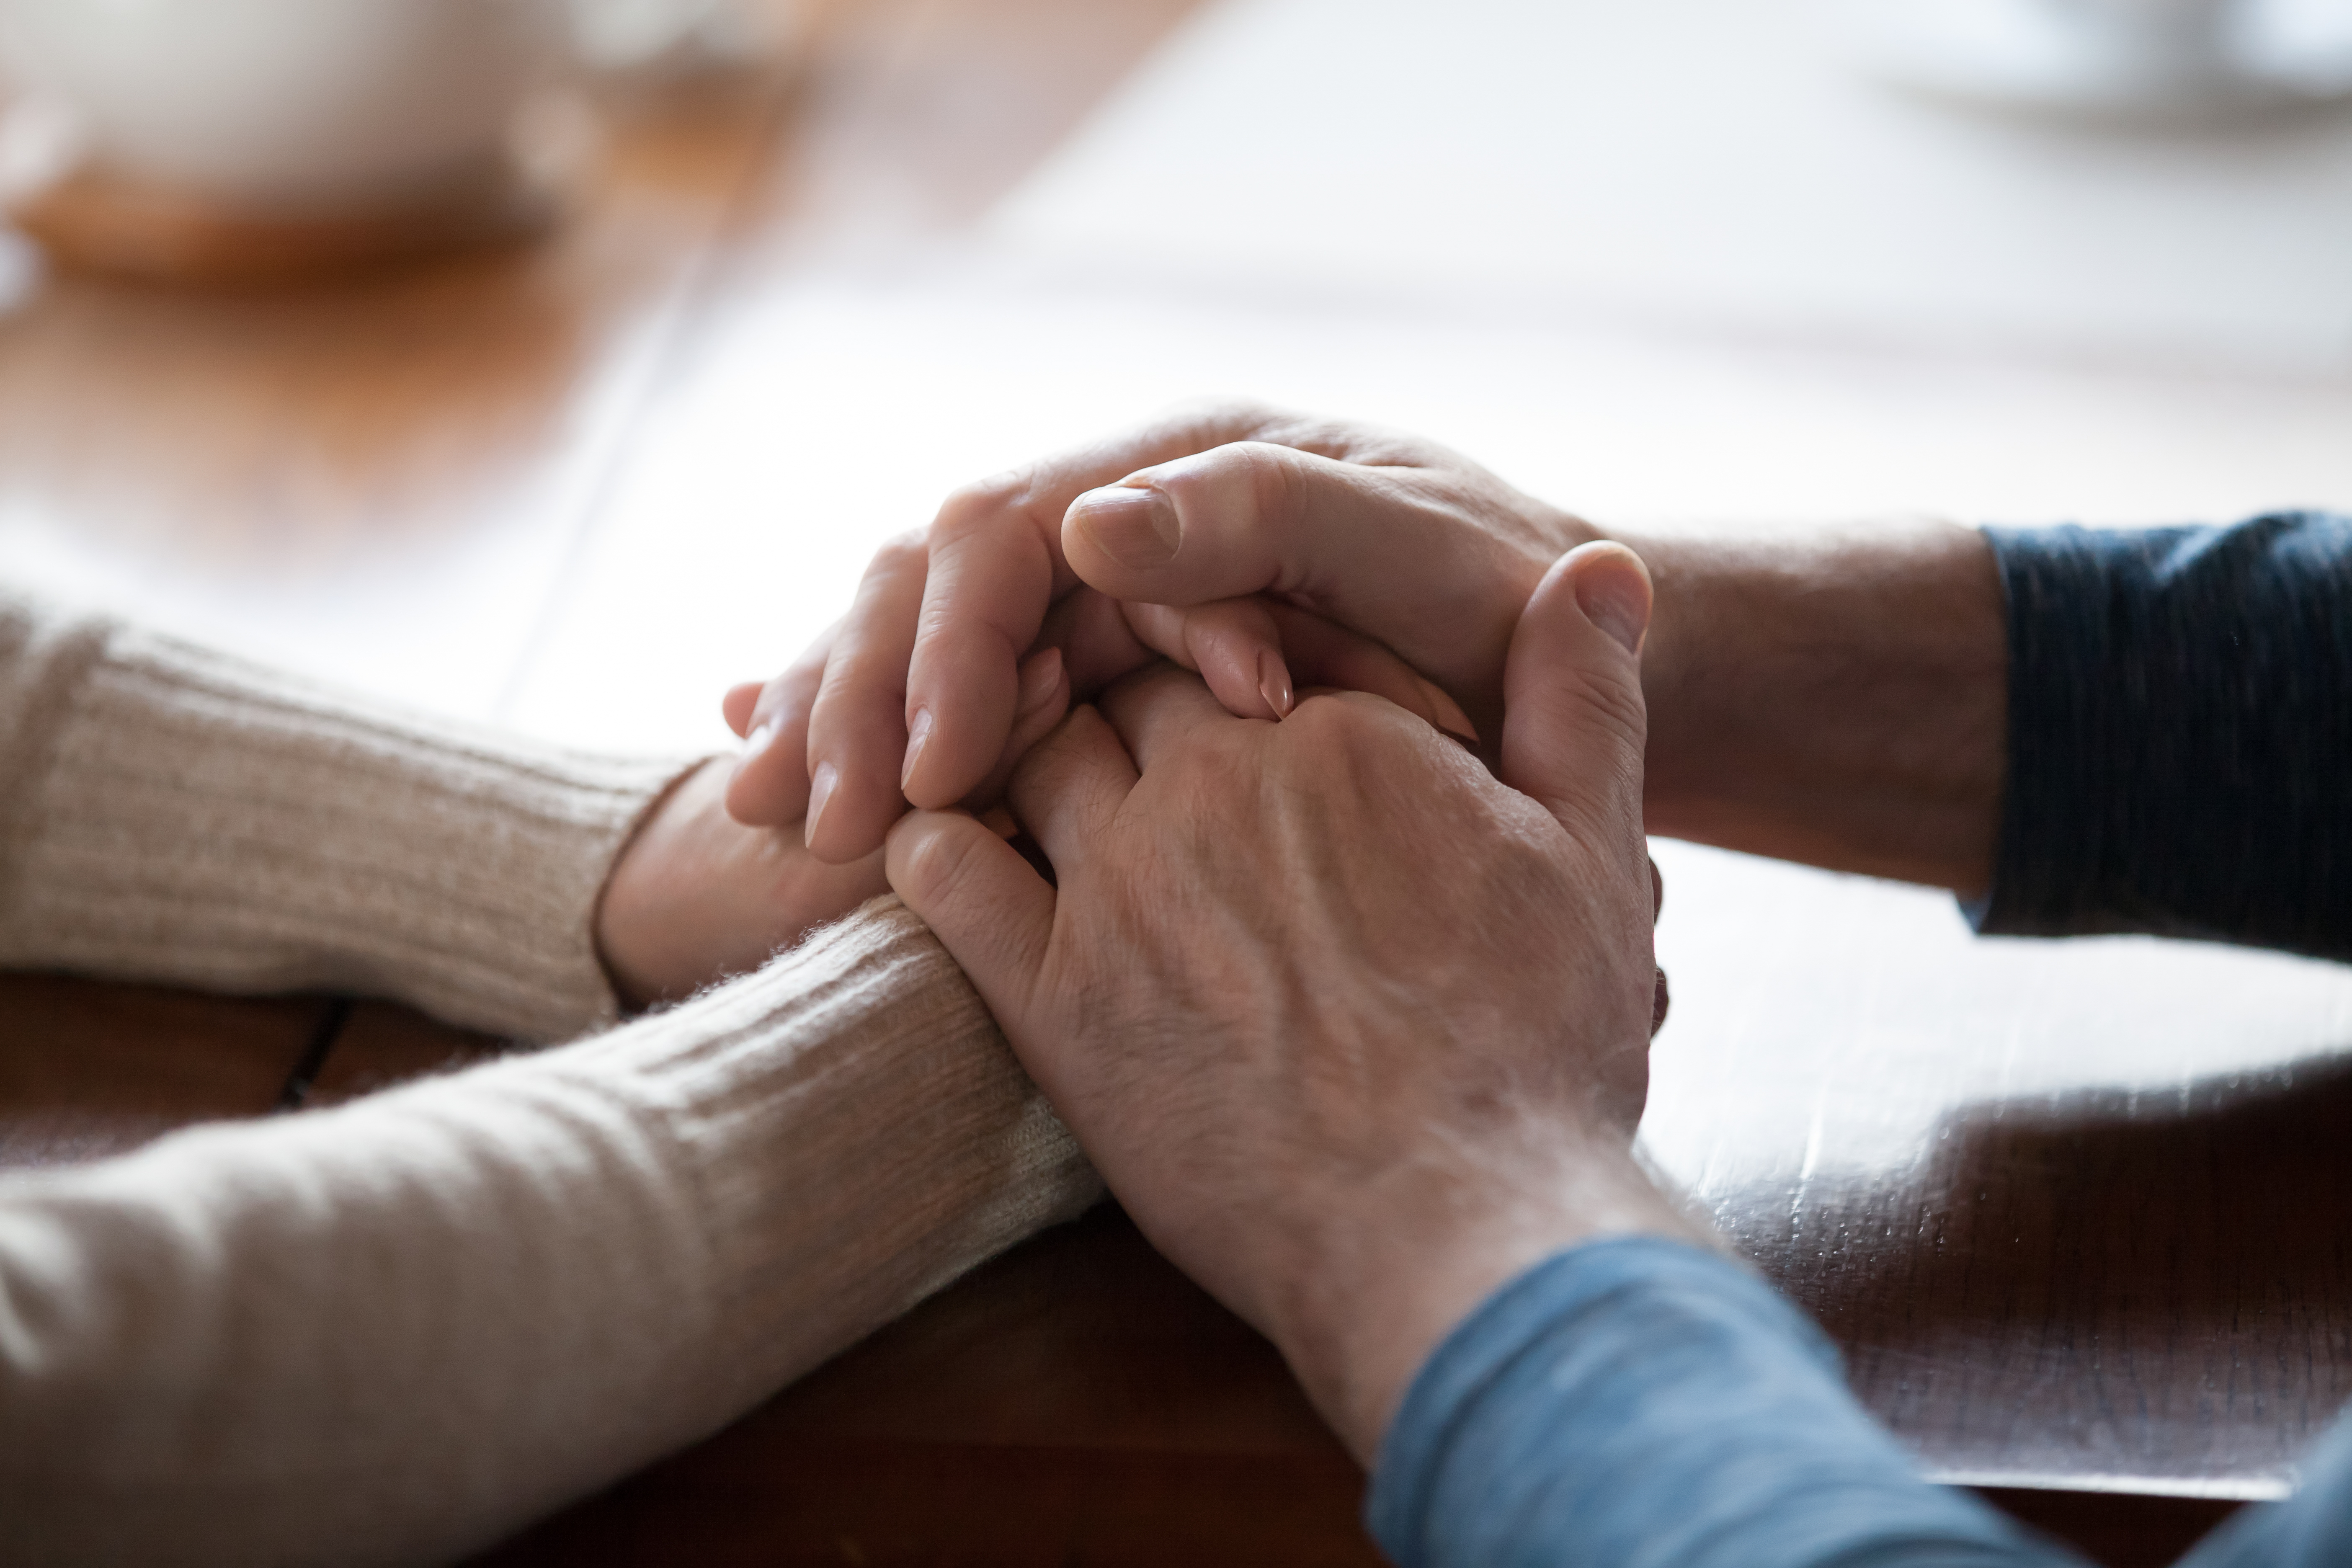 A senior couple holding hands | Source: Shutterstock